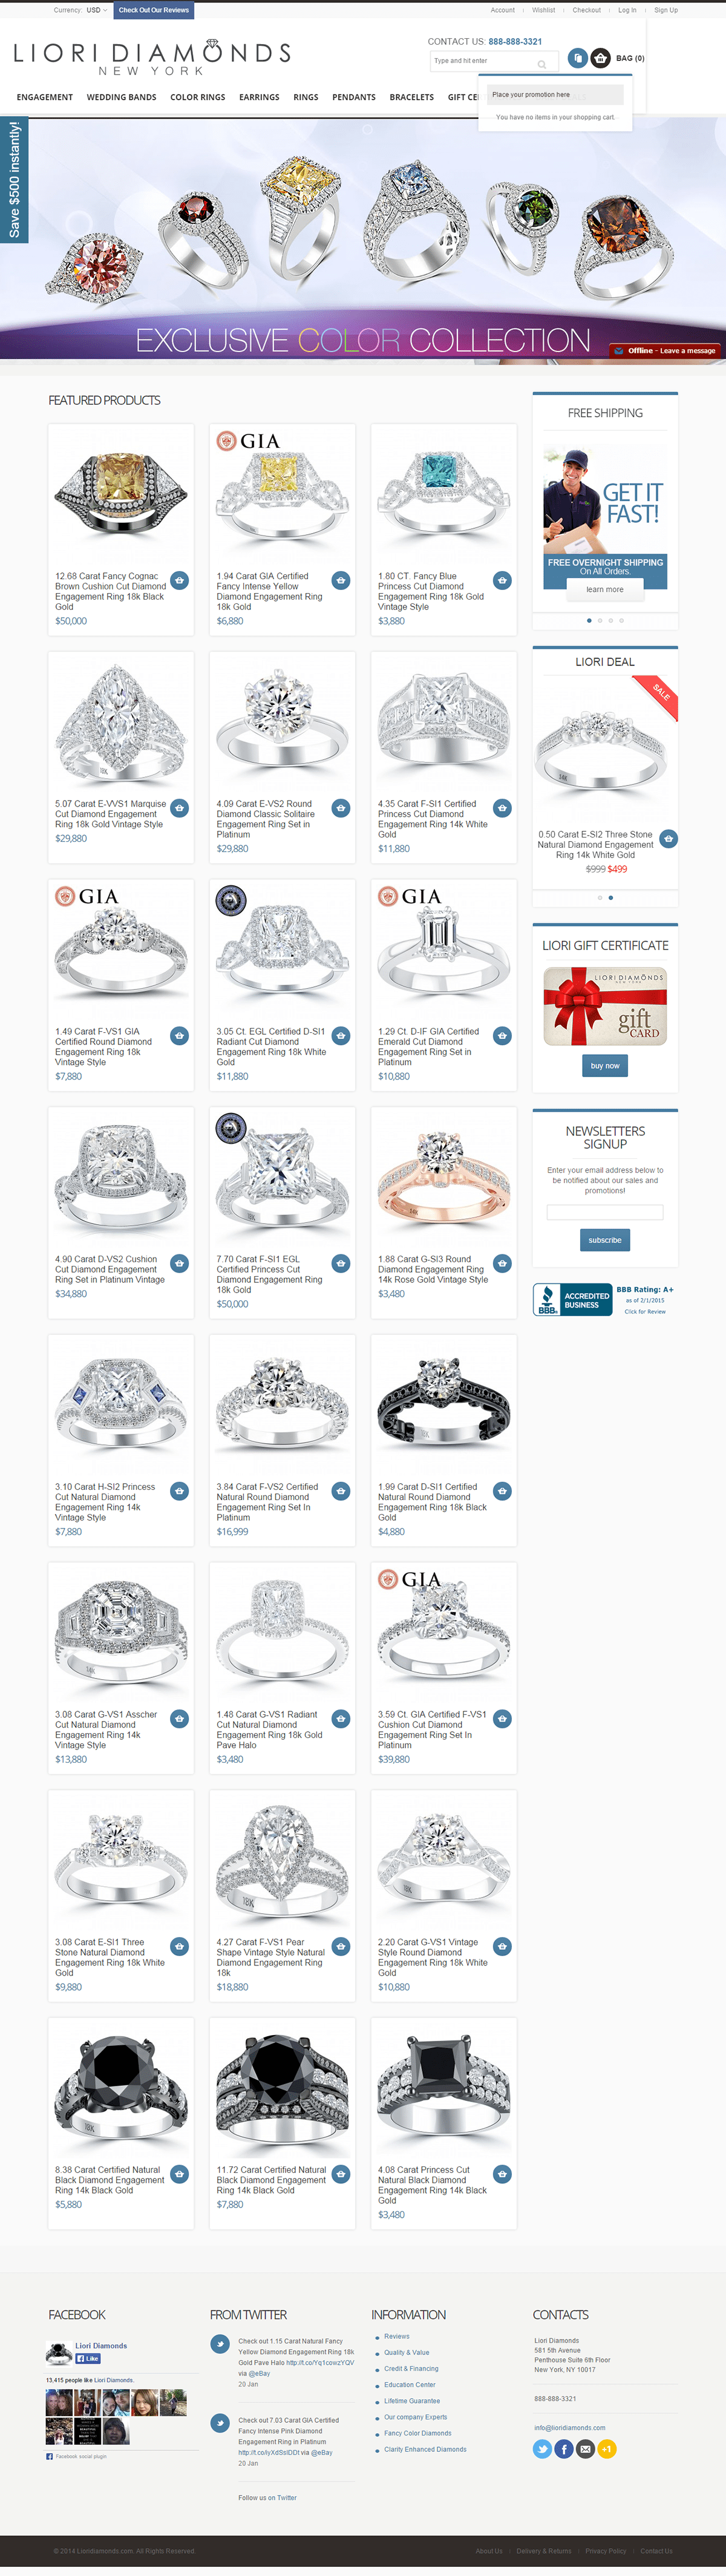 online store Ecommerce online shopping portal dimonds diamonds jewelry fashion website